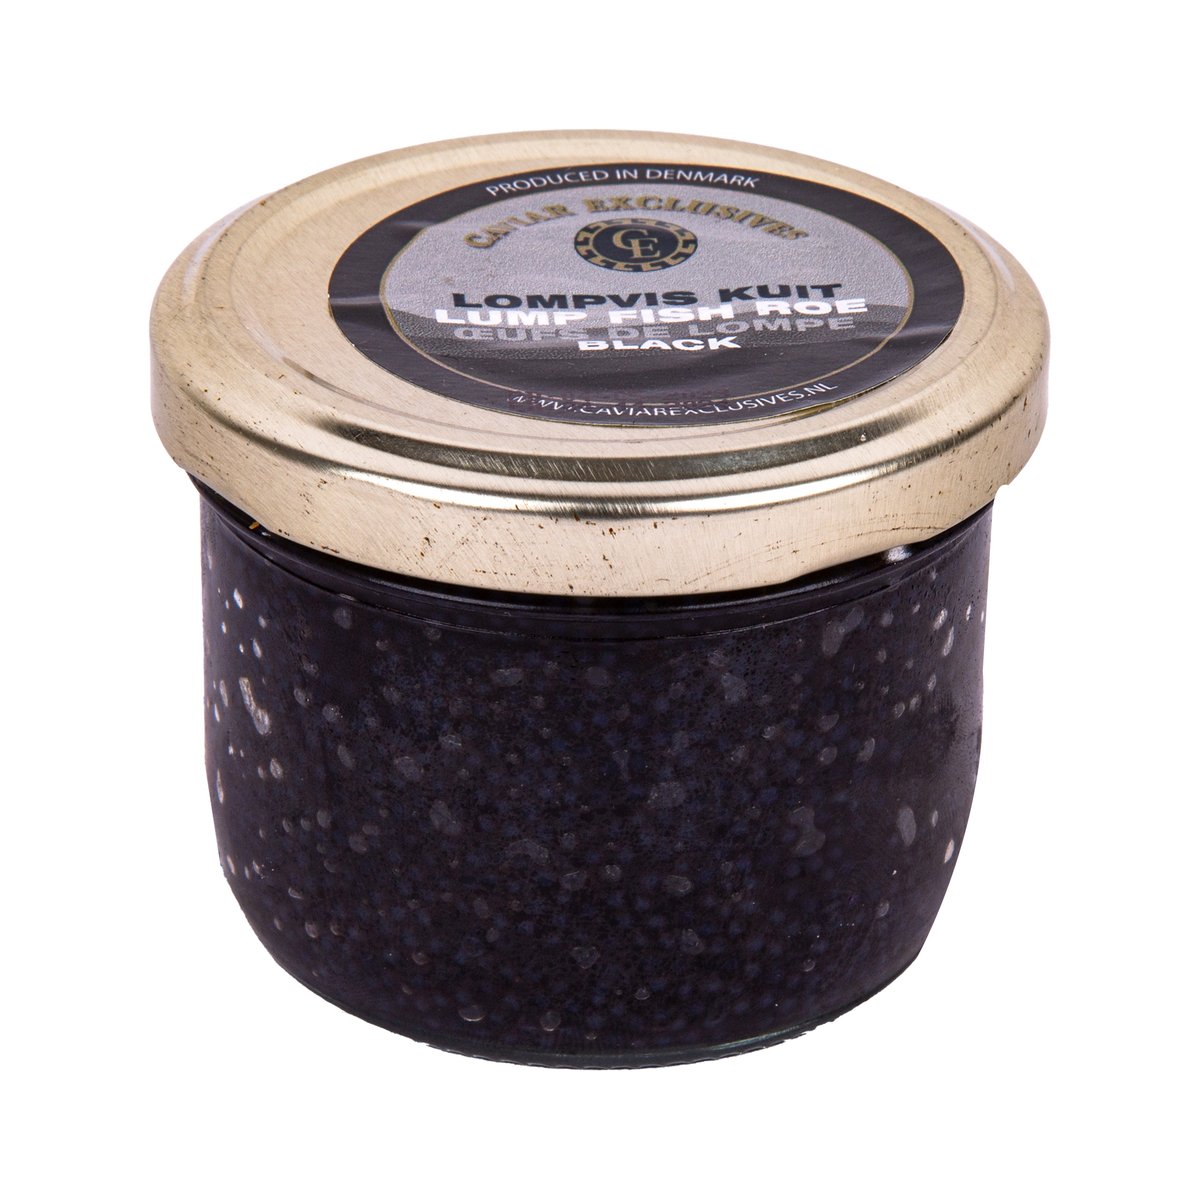 Caviar Exclusives Lump Fish Roe Black 100 g